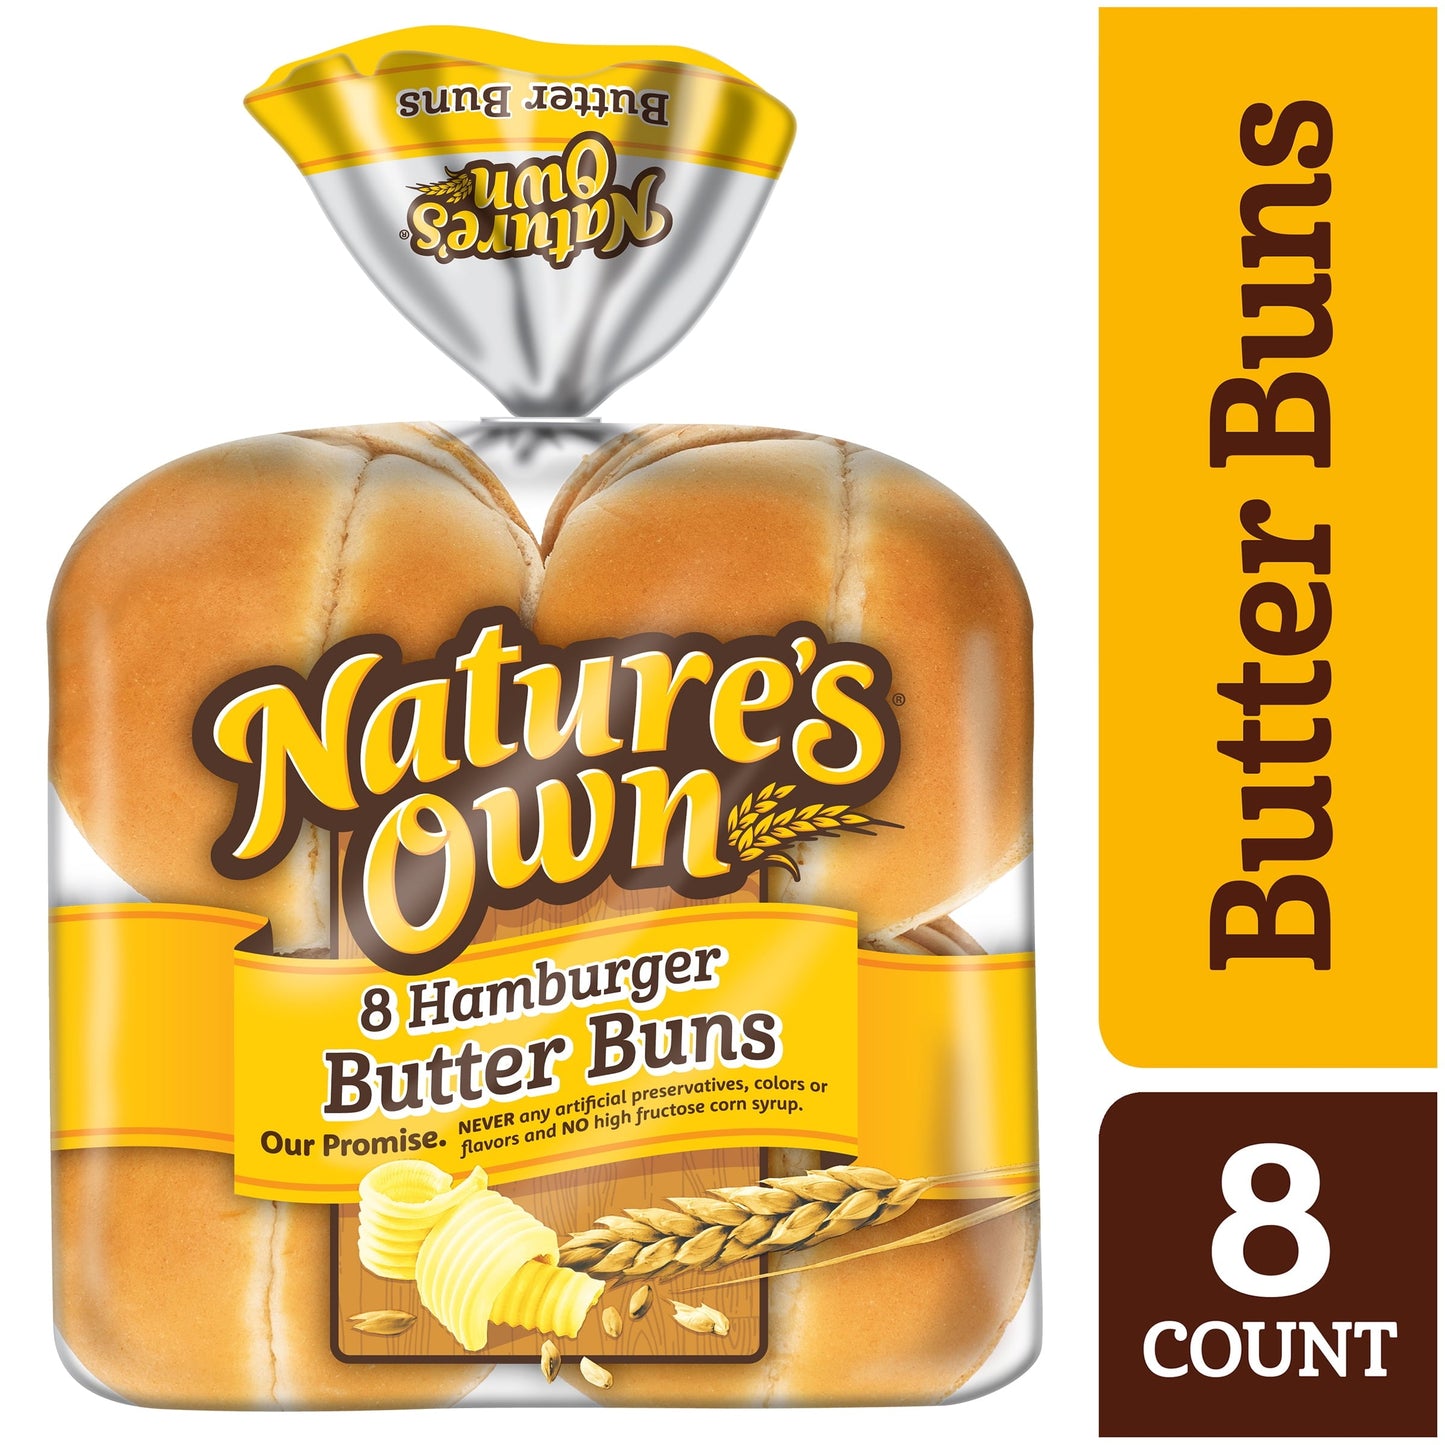 Nature's Own White Hamburger Butter Buns, 16 oz, 8 Count